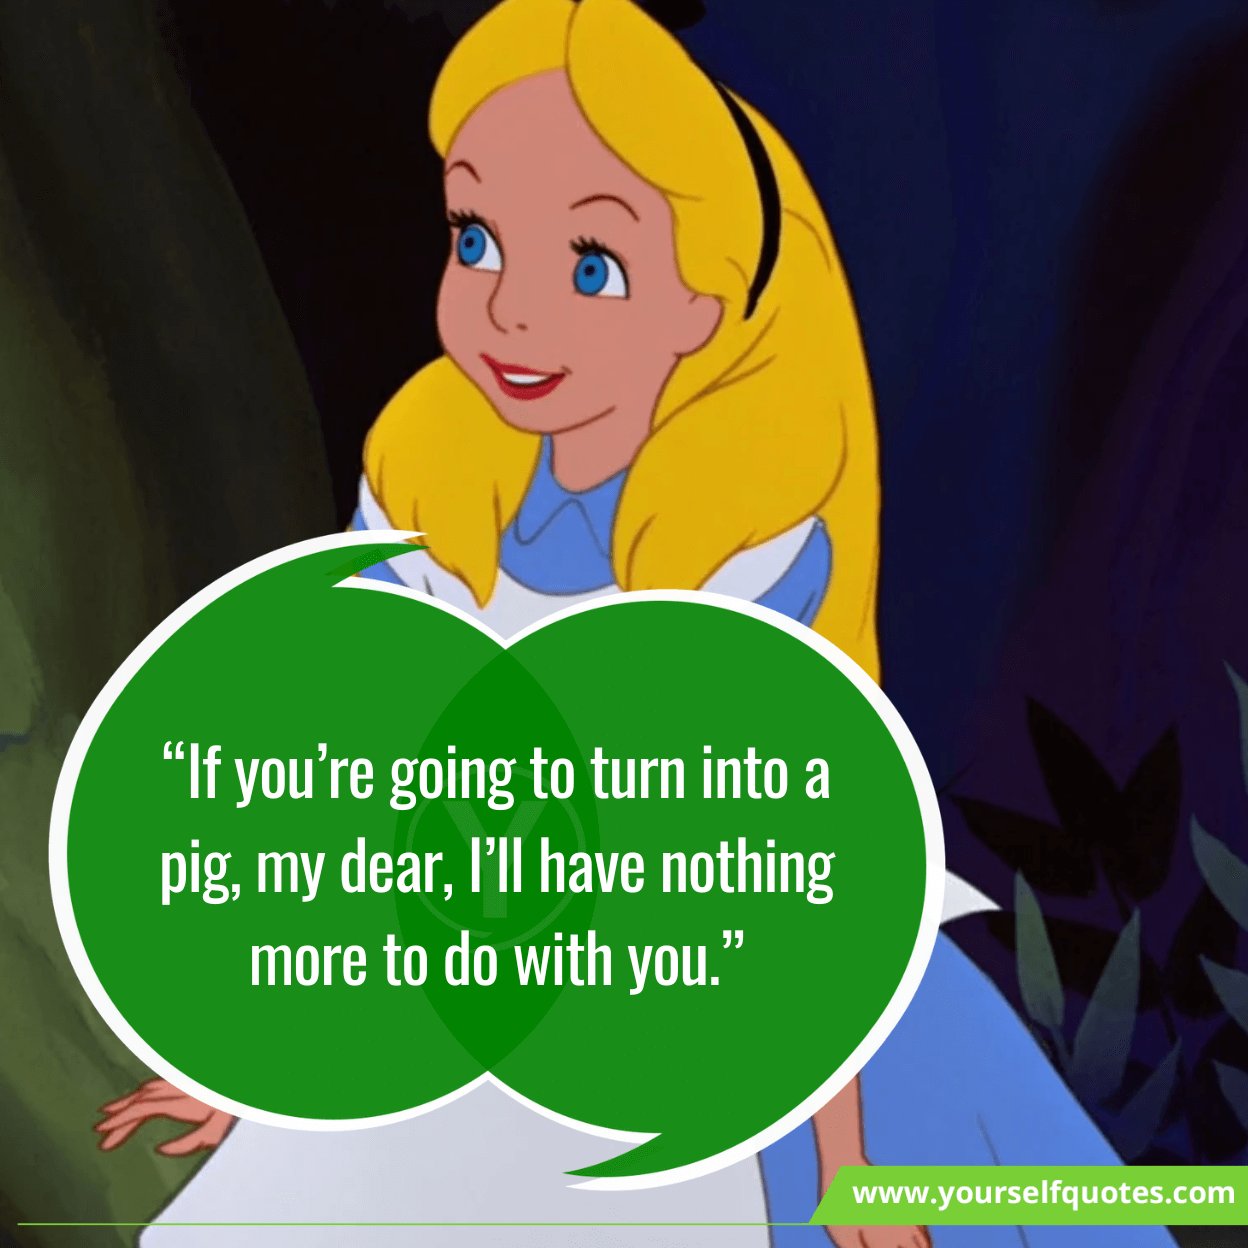 Alice in Wonderland Quotes Images